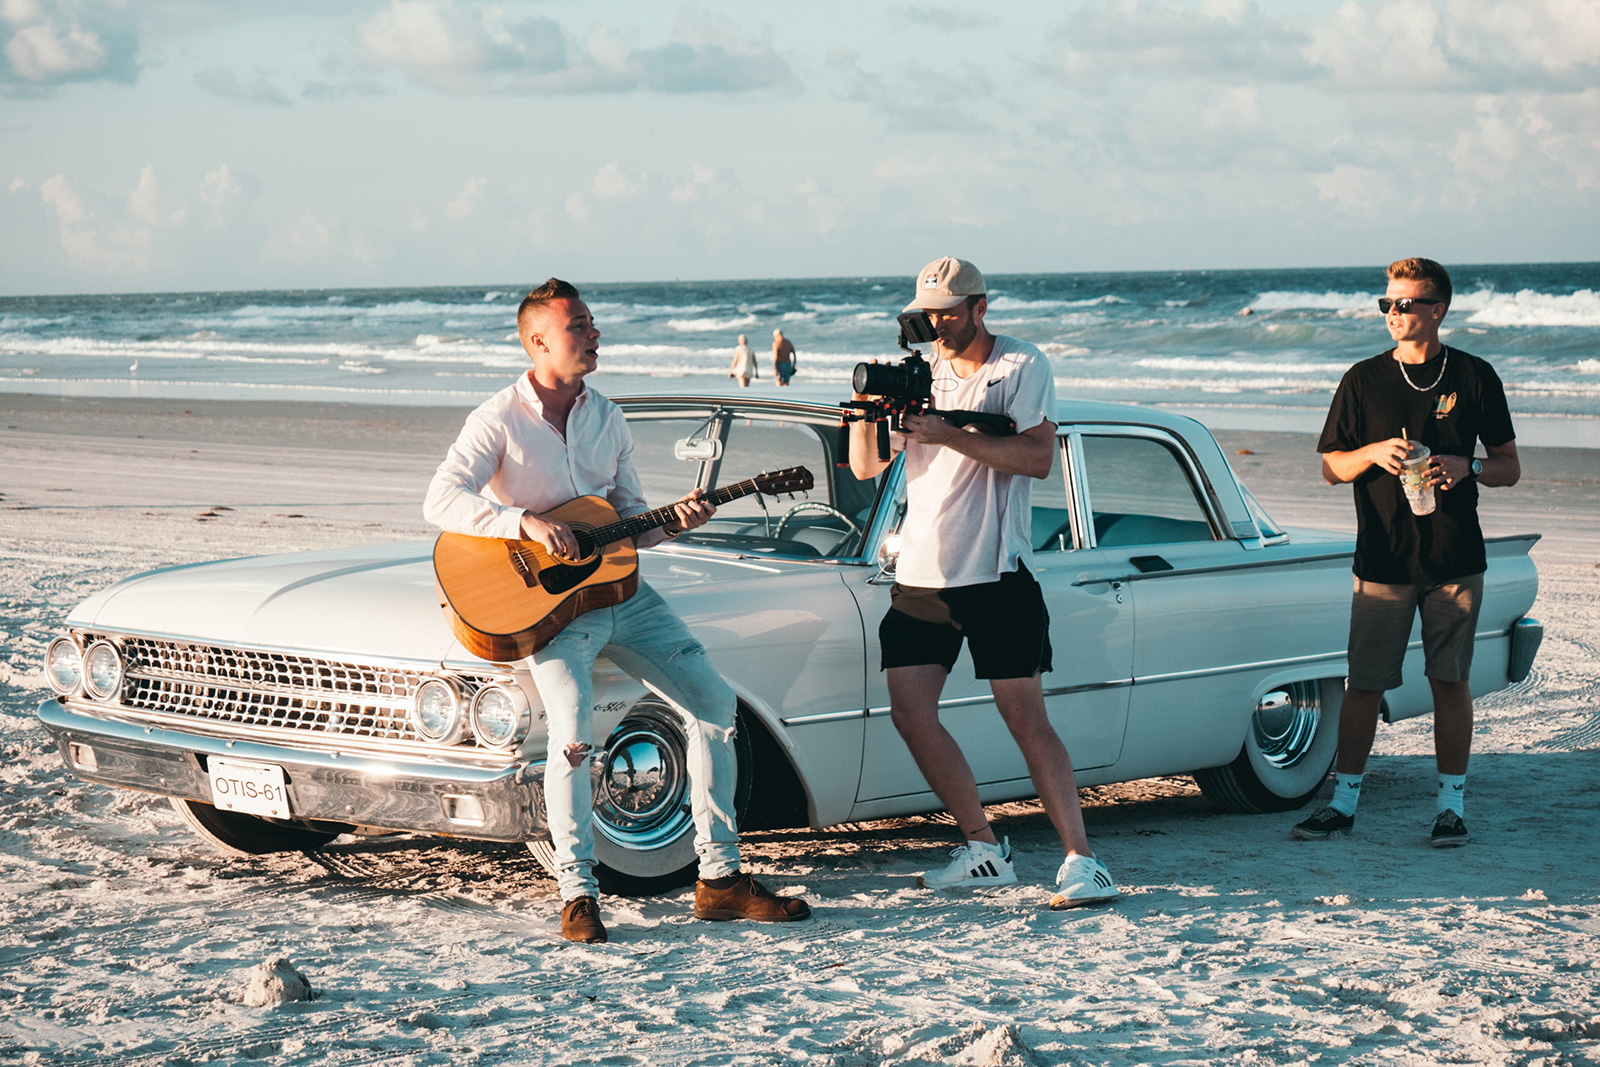 music video shoot on beach